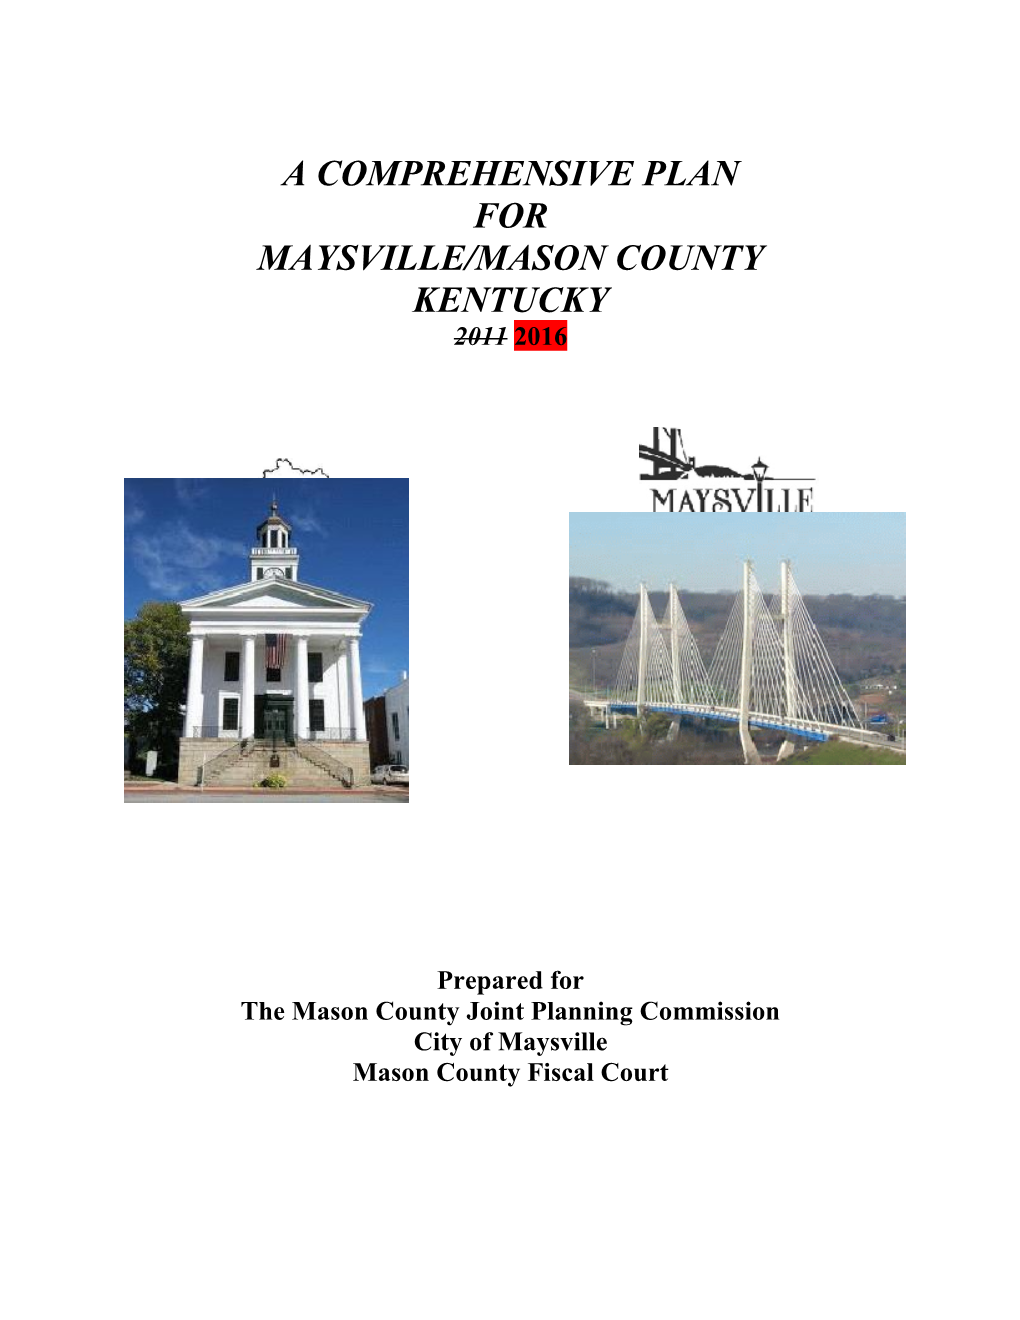 A Comprehensive Plan for Maysville/Mason County Kentucky 2011 2016